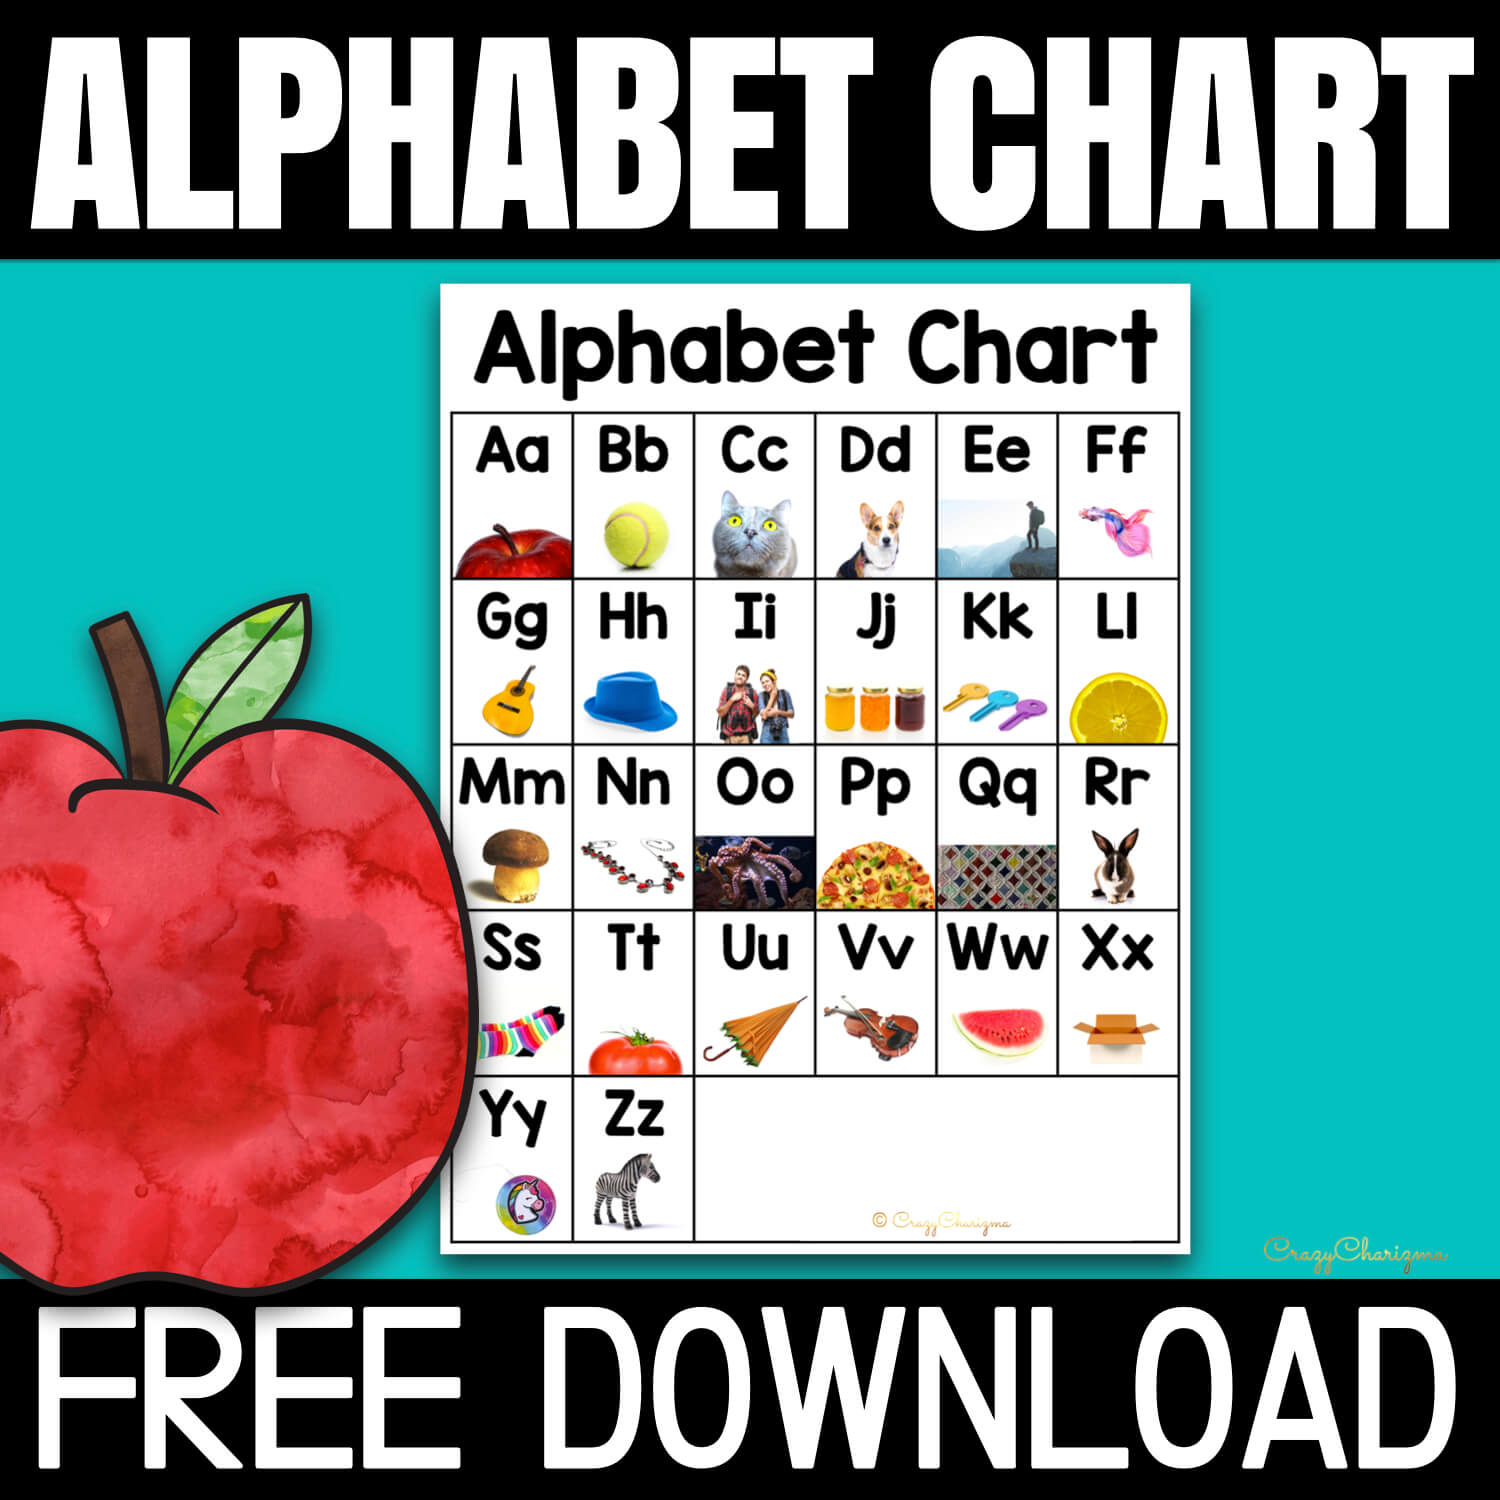 Alphabet Chart Free Download